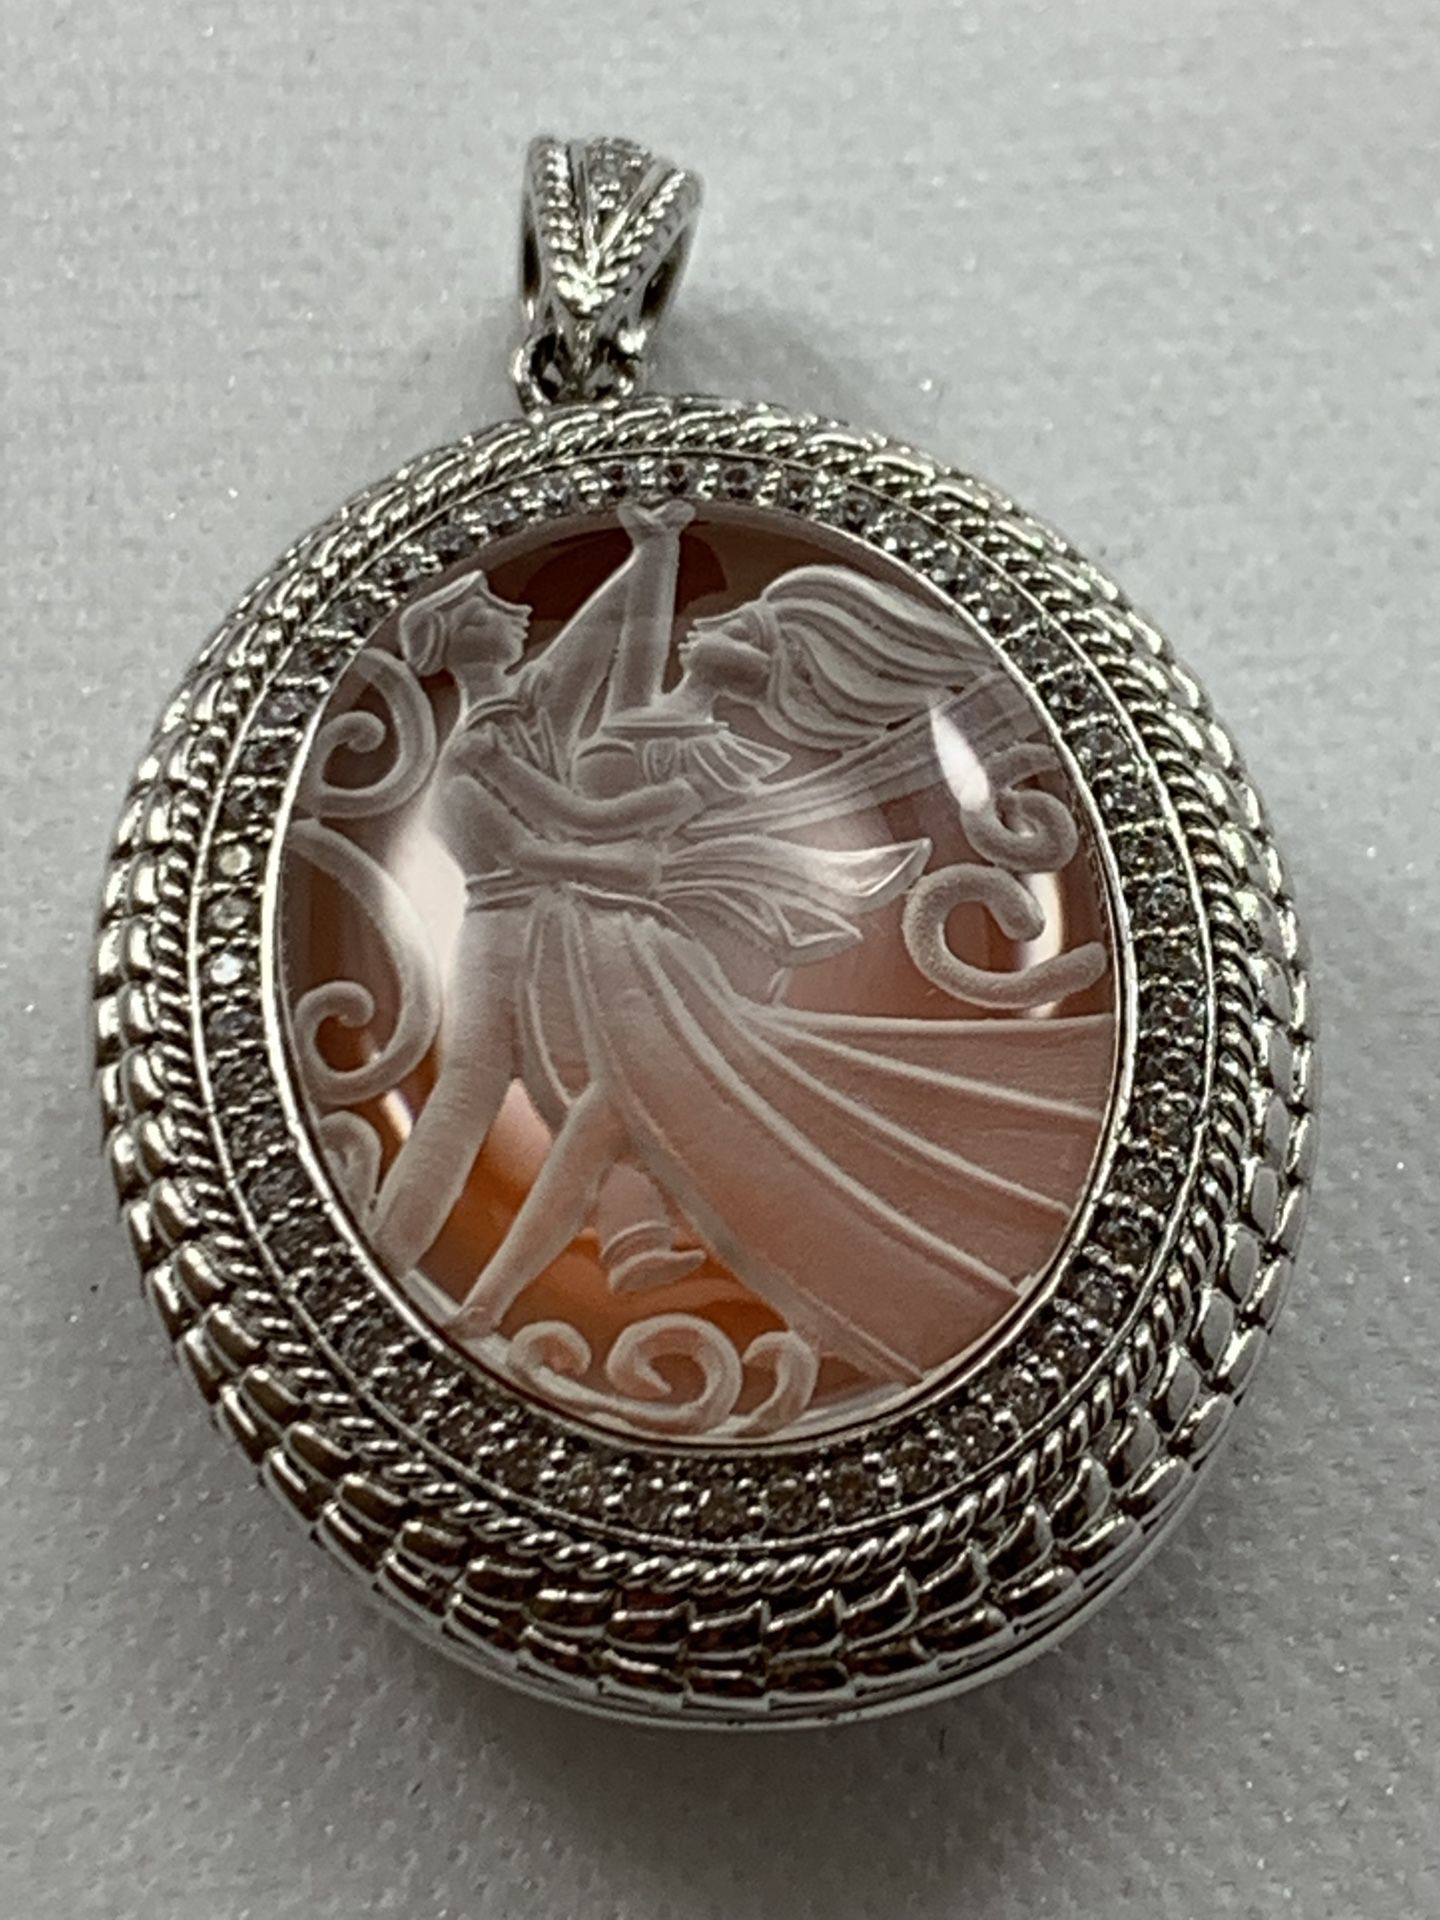 Unique antique silver open locket with CZ sparkly rhinestone pendant